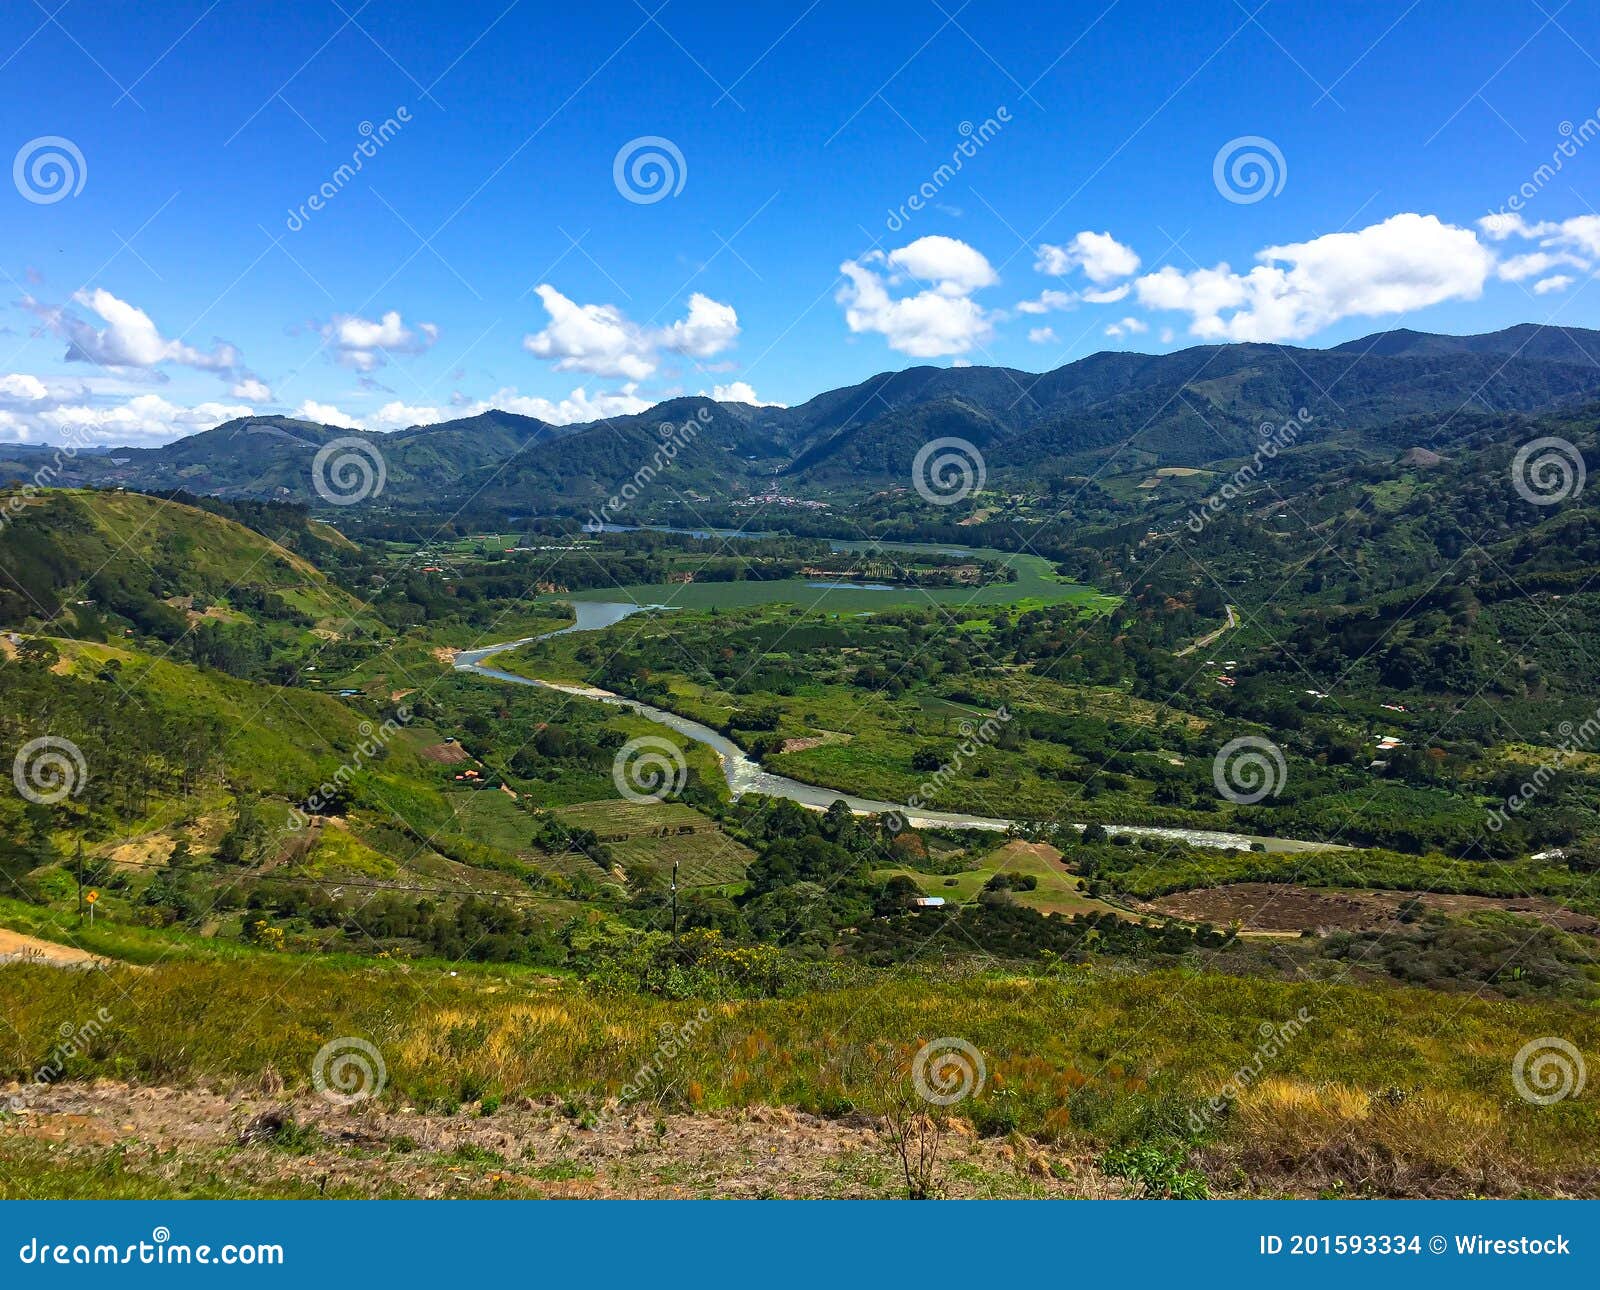 beautiful view of mirador de orosi park in cartago, costa rica